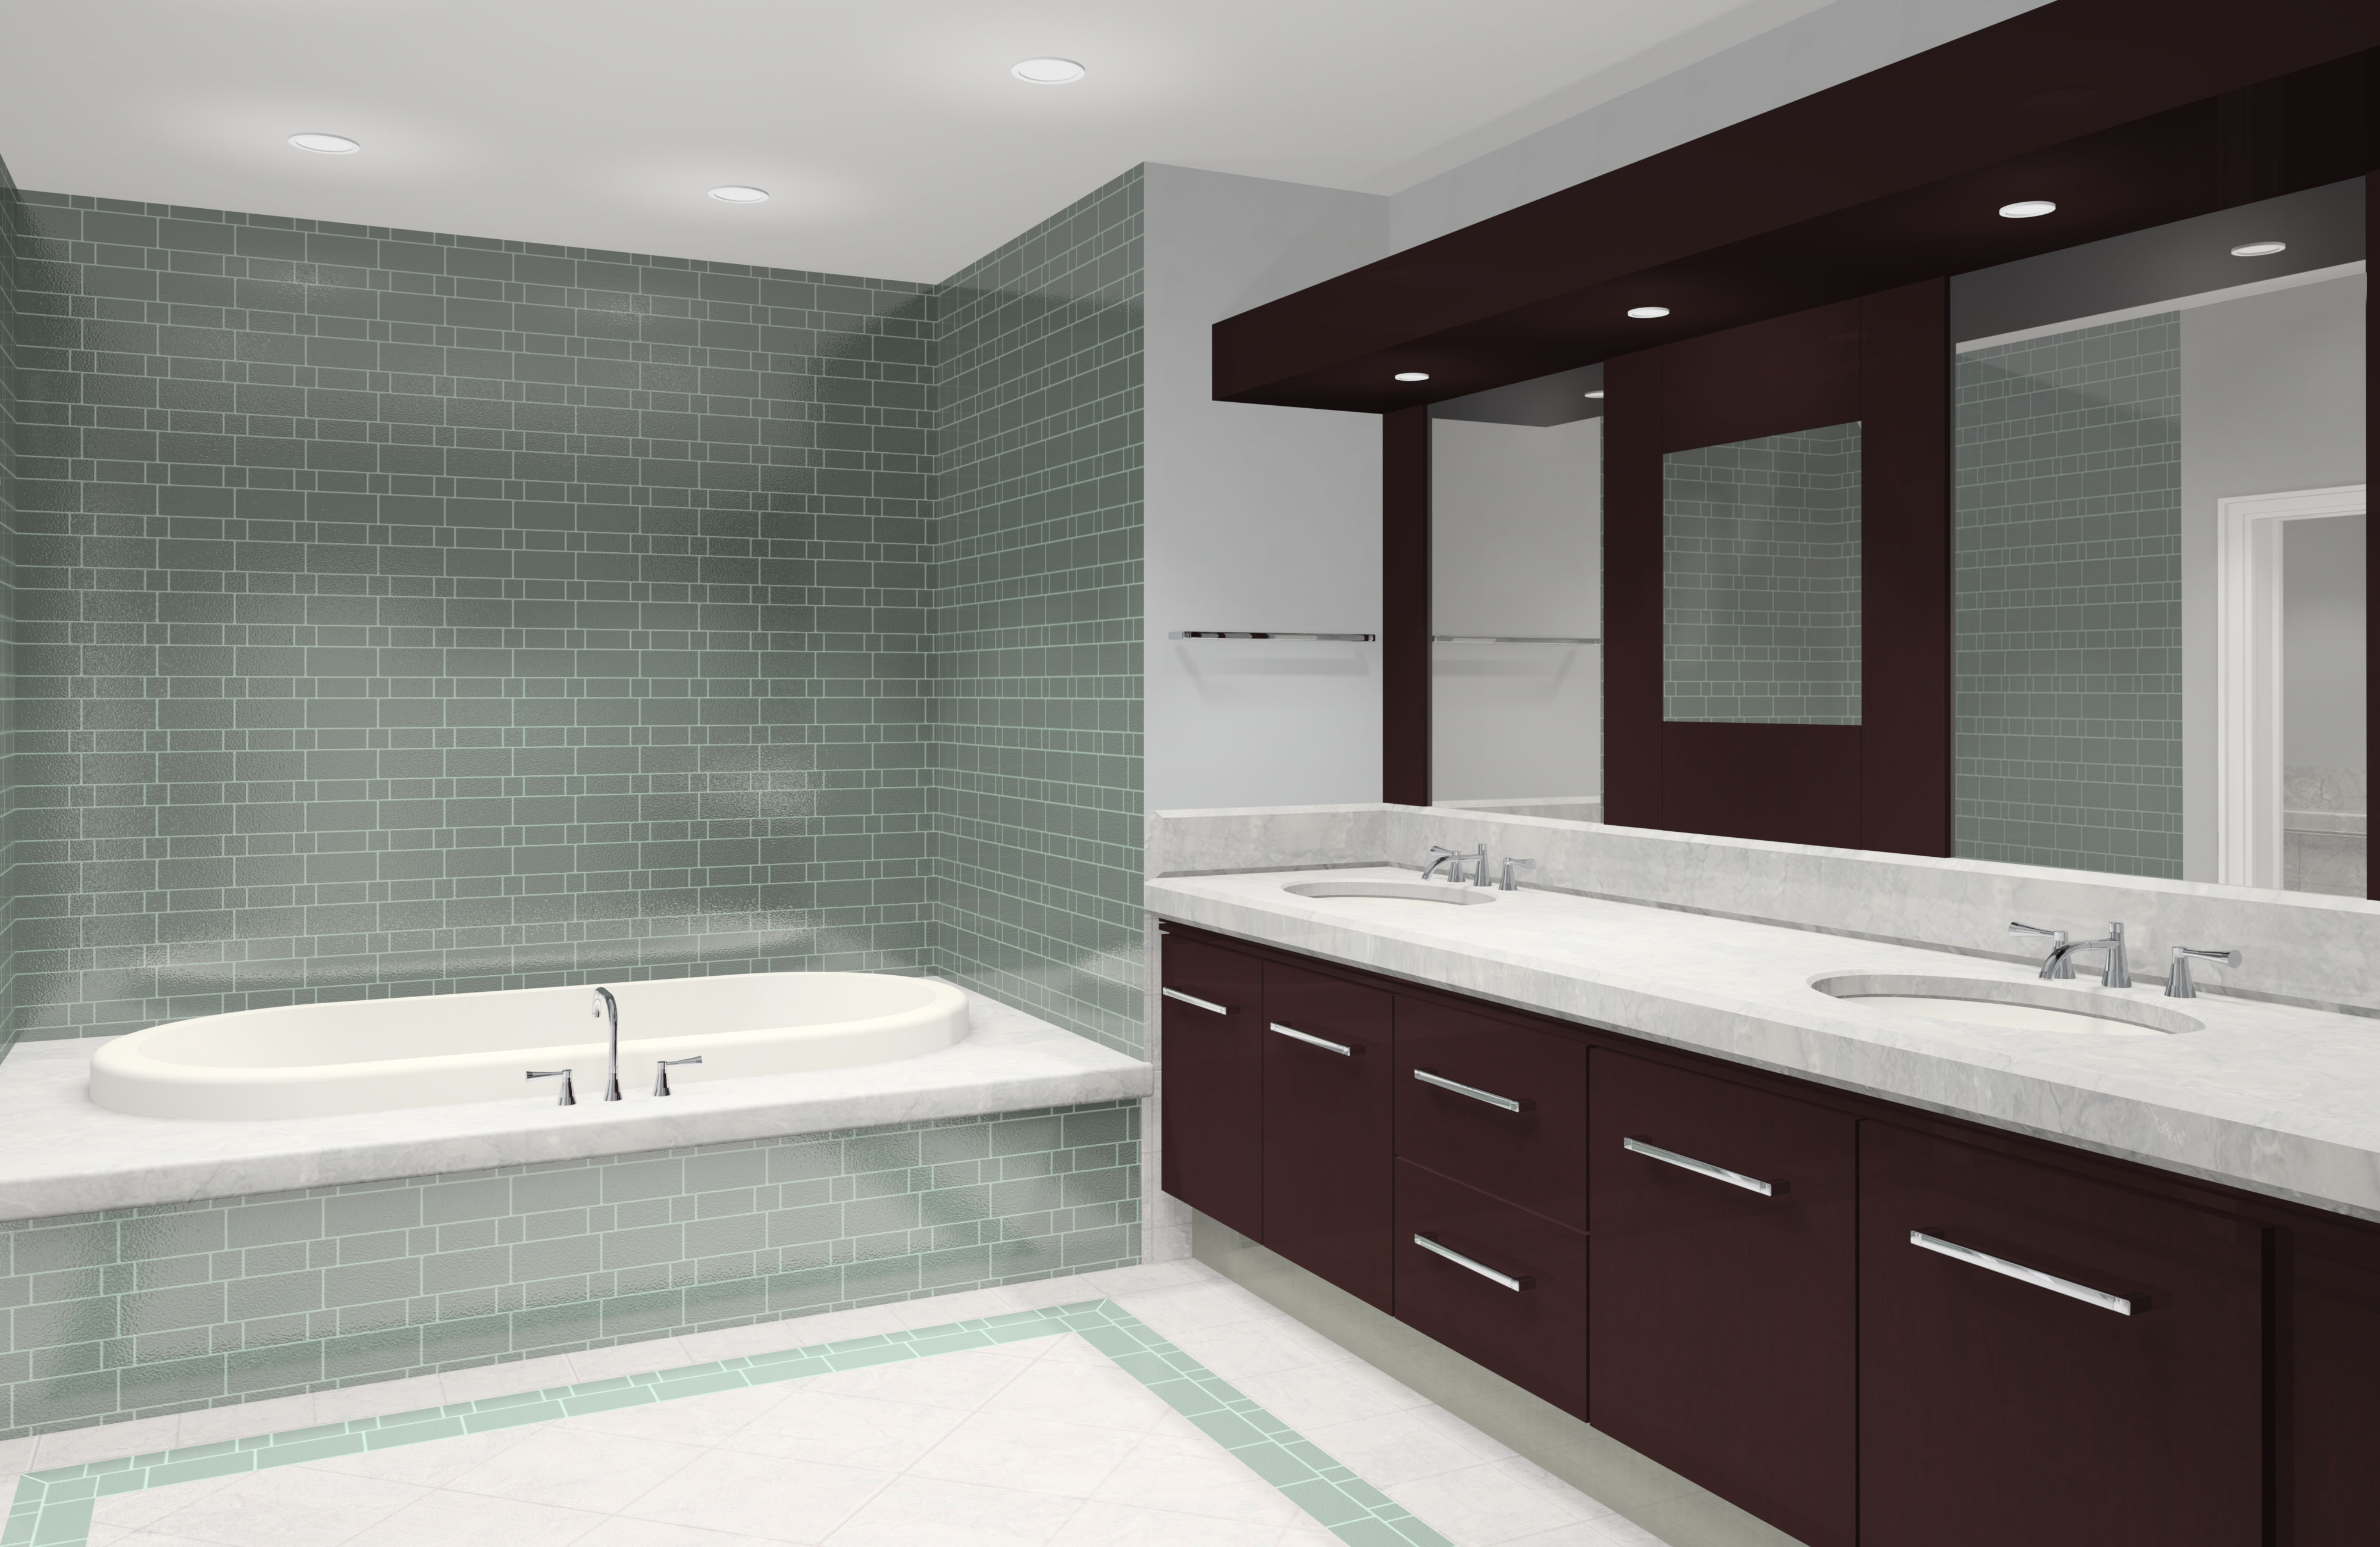 25 amazing Italian bathroom tile designs ideas and pictures 2020